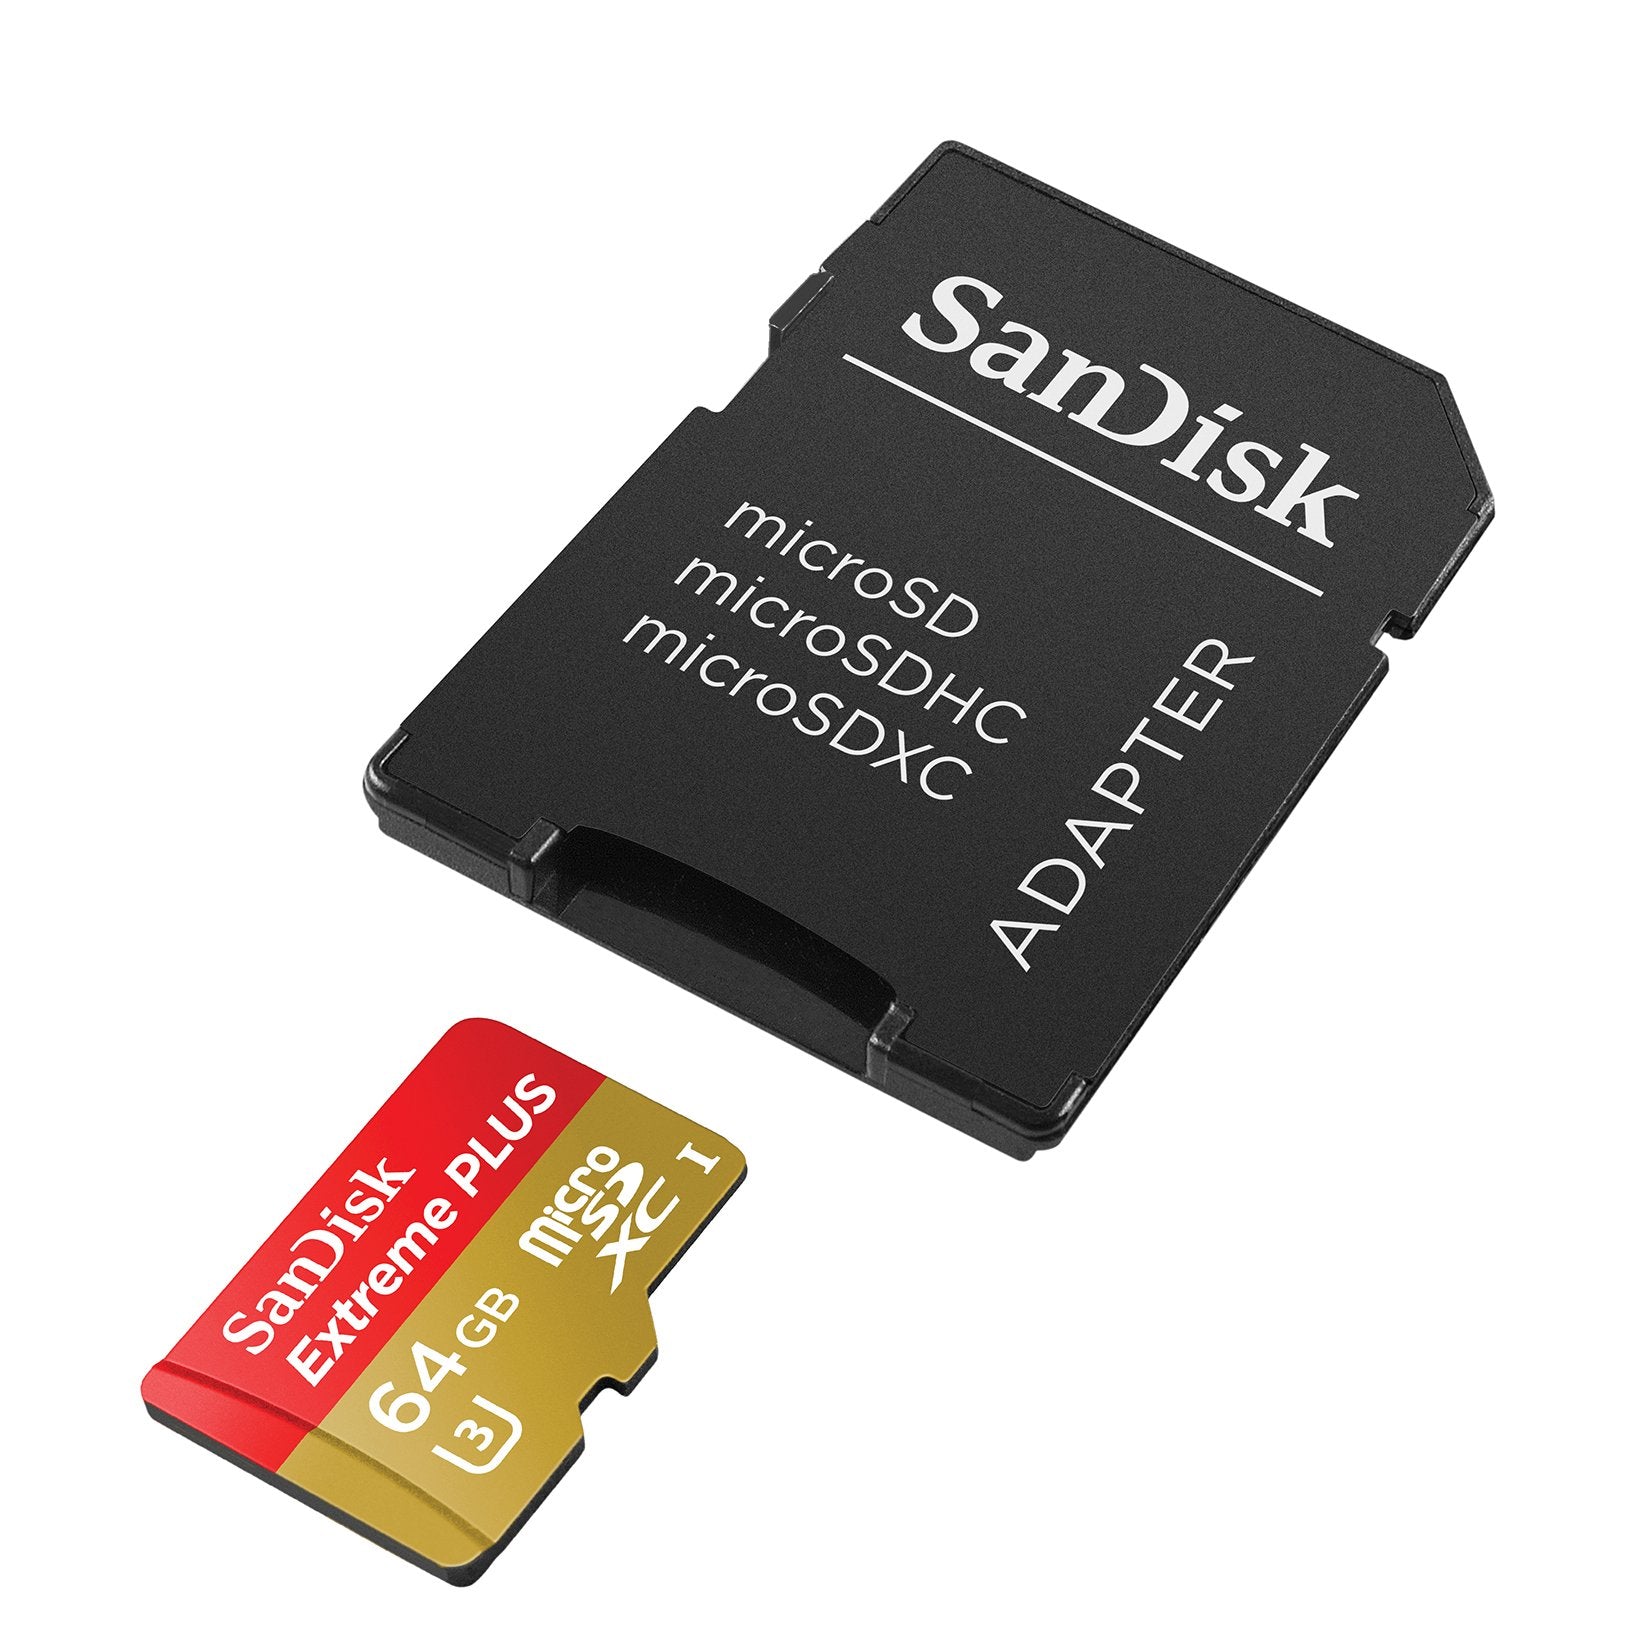 SanDisk Extreme PLUS 64GB microSDXC UHS-I/U3 Card with Adapter (SDSQXSG-064G)